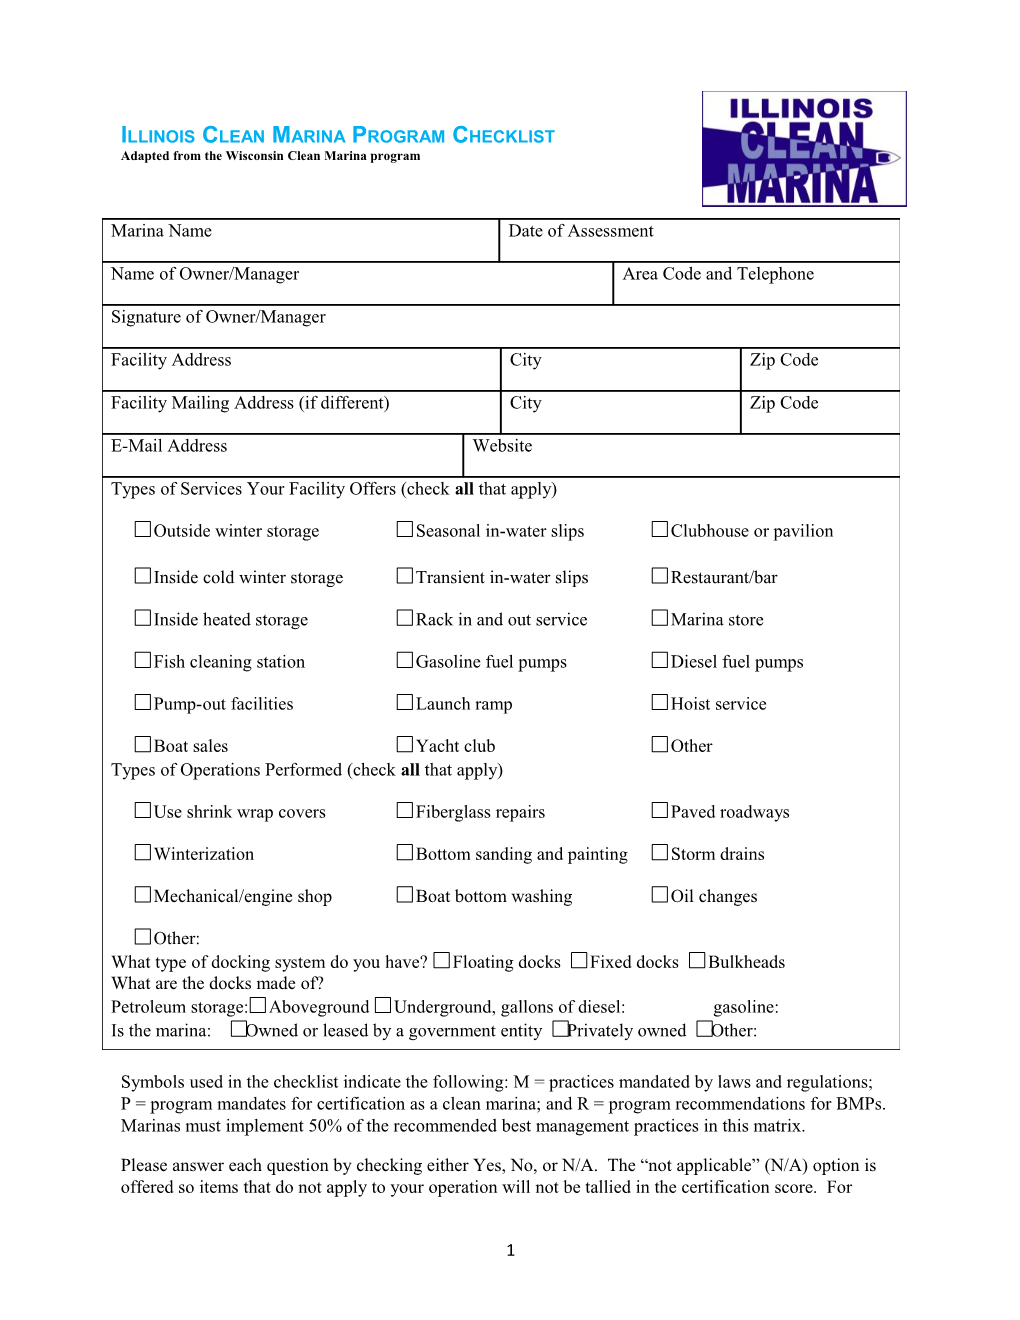 Illinois Clean Marina Program Checklist